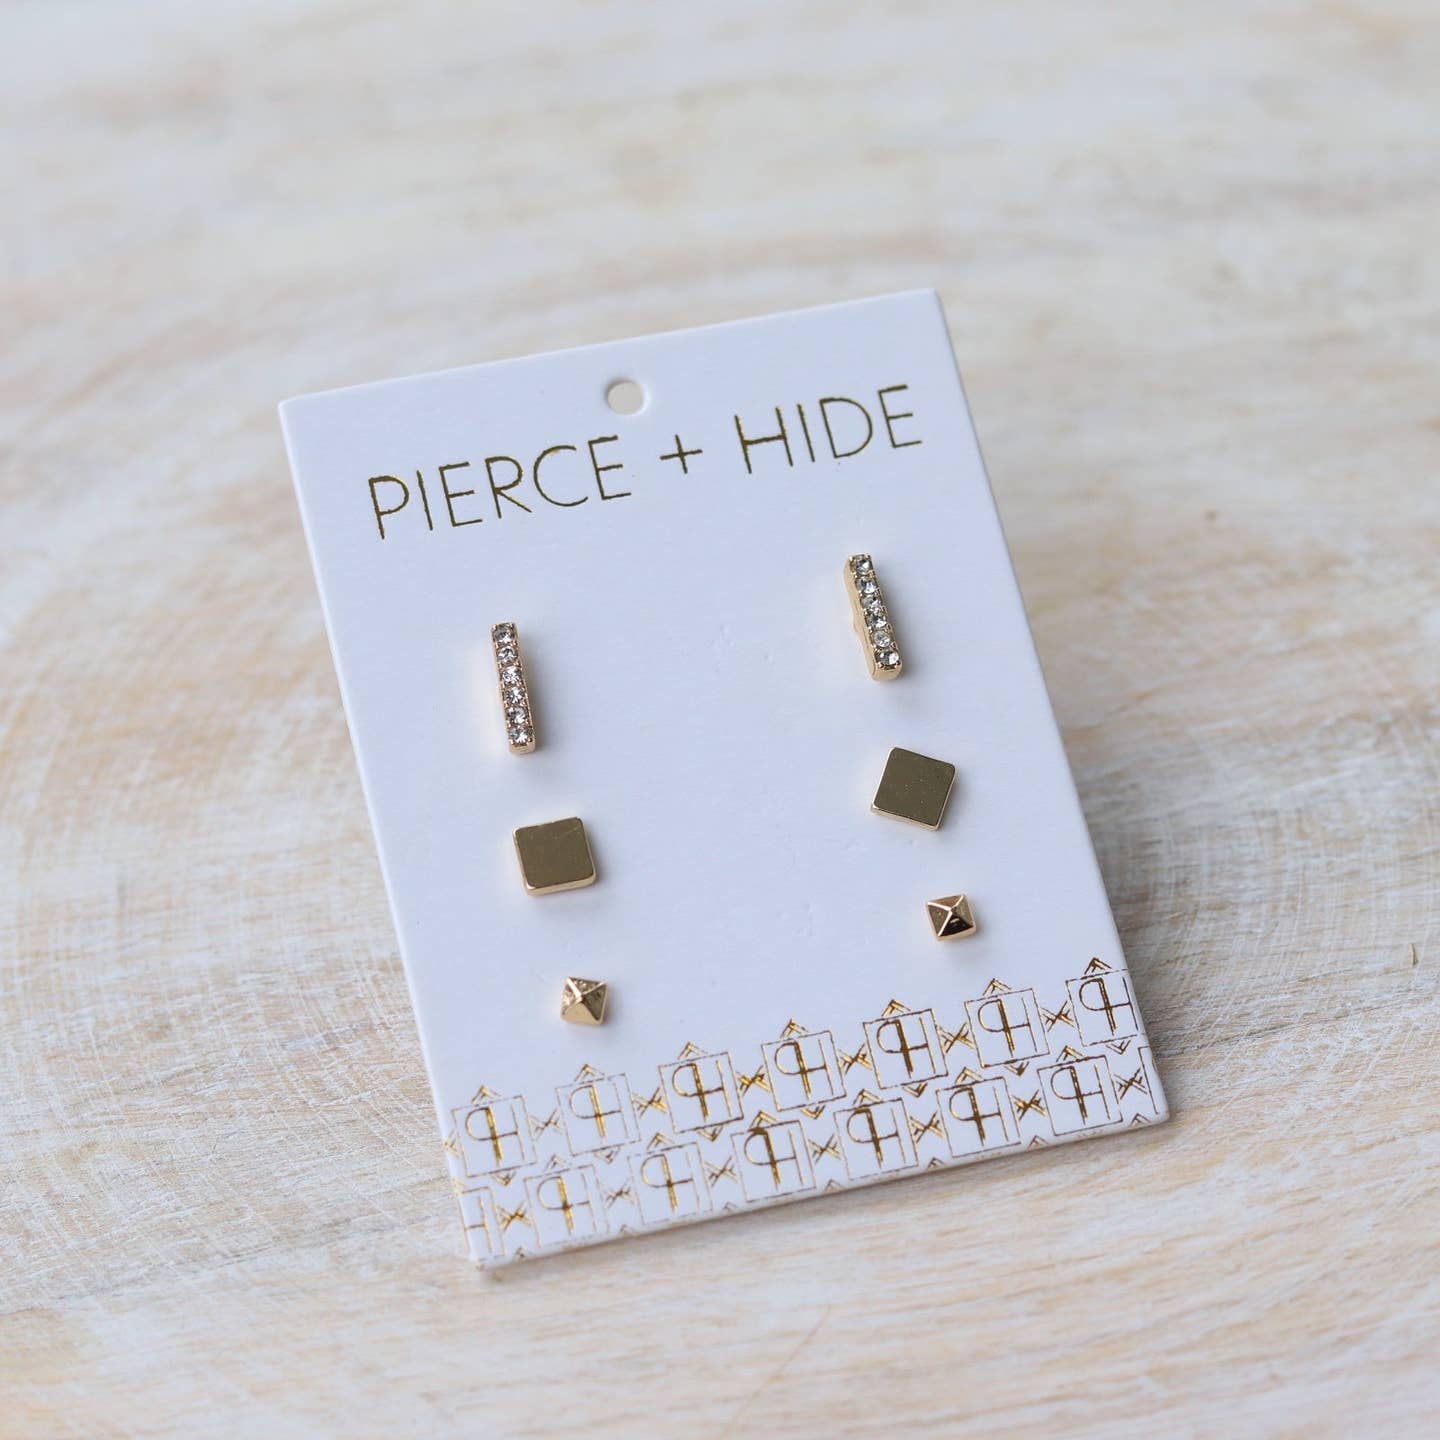 Pierce + Hide: Bar and Square Stud Trio Earrings